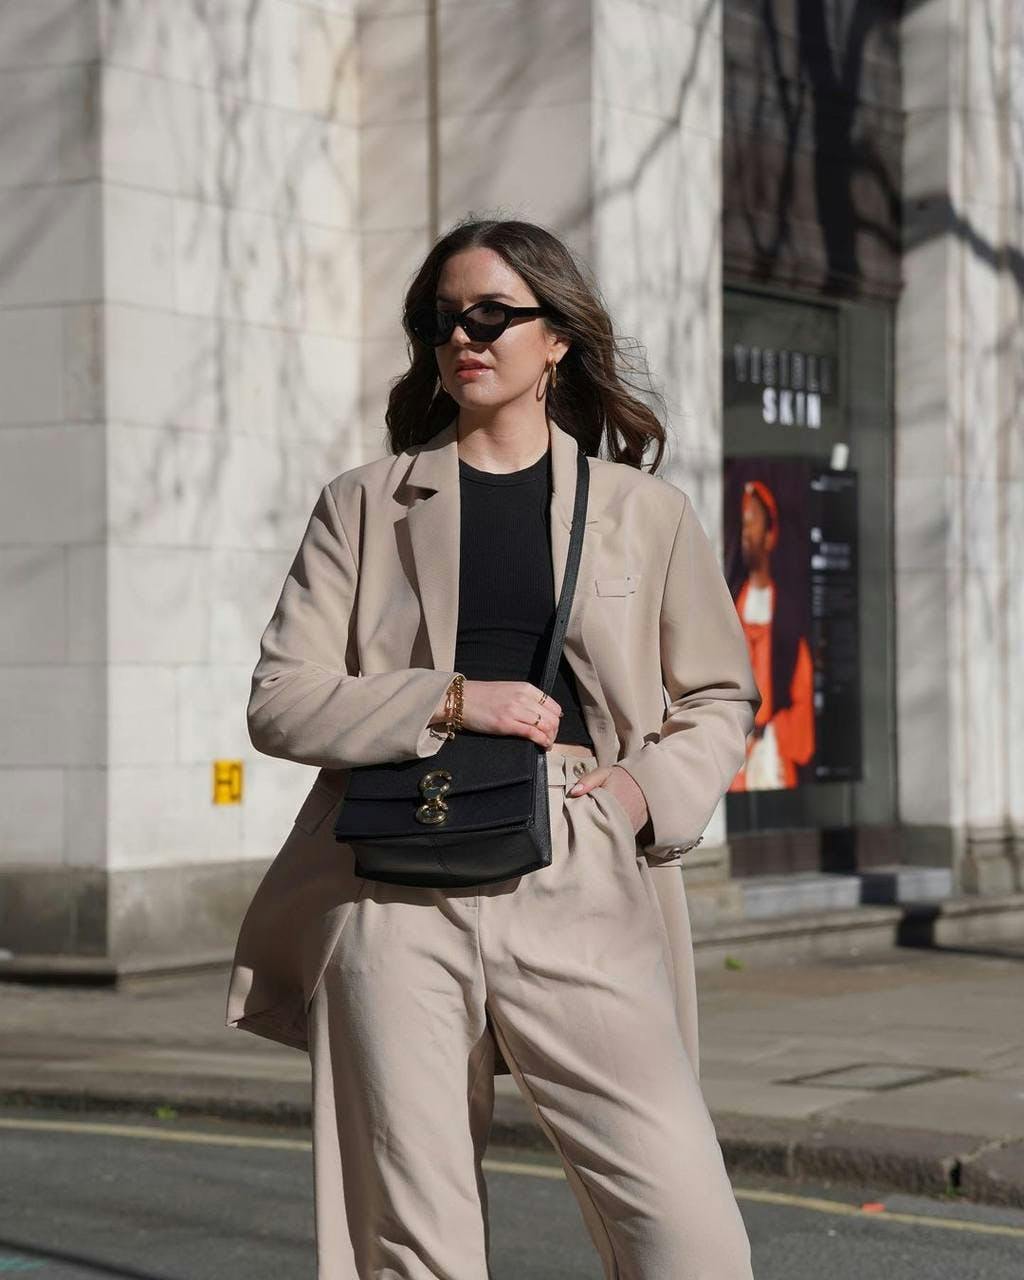 clothing apparel overcoat coat sunglasses accessories accessory person human footwear